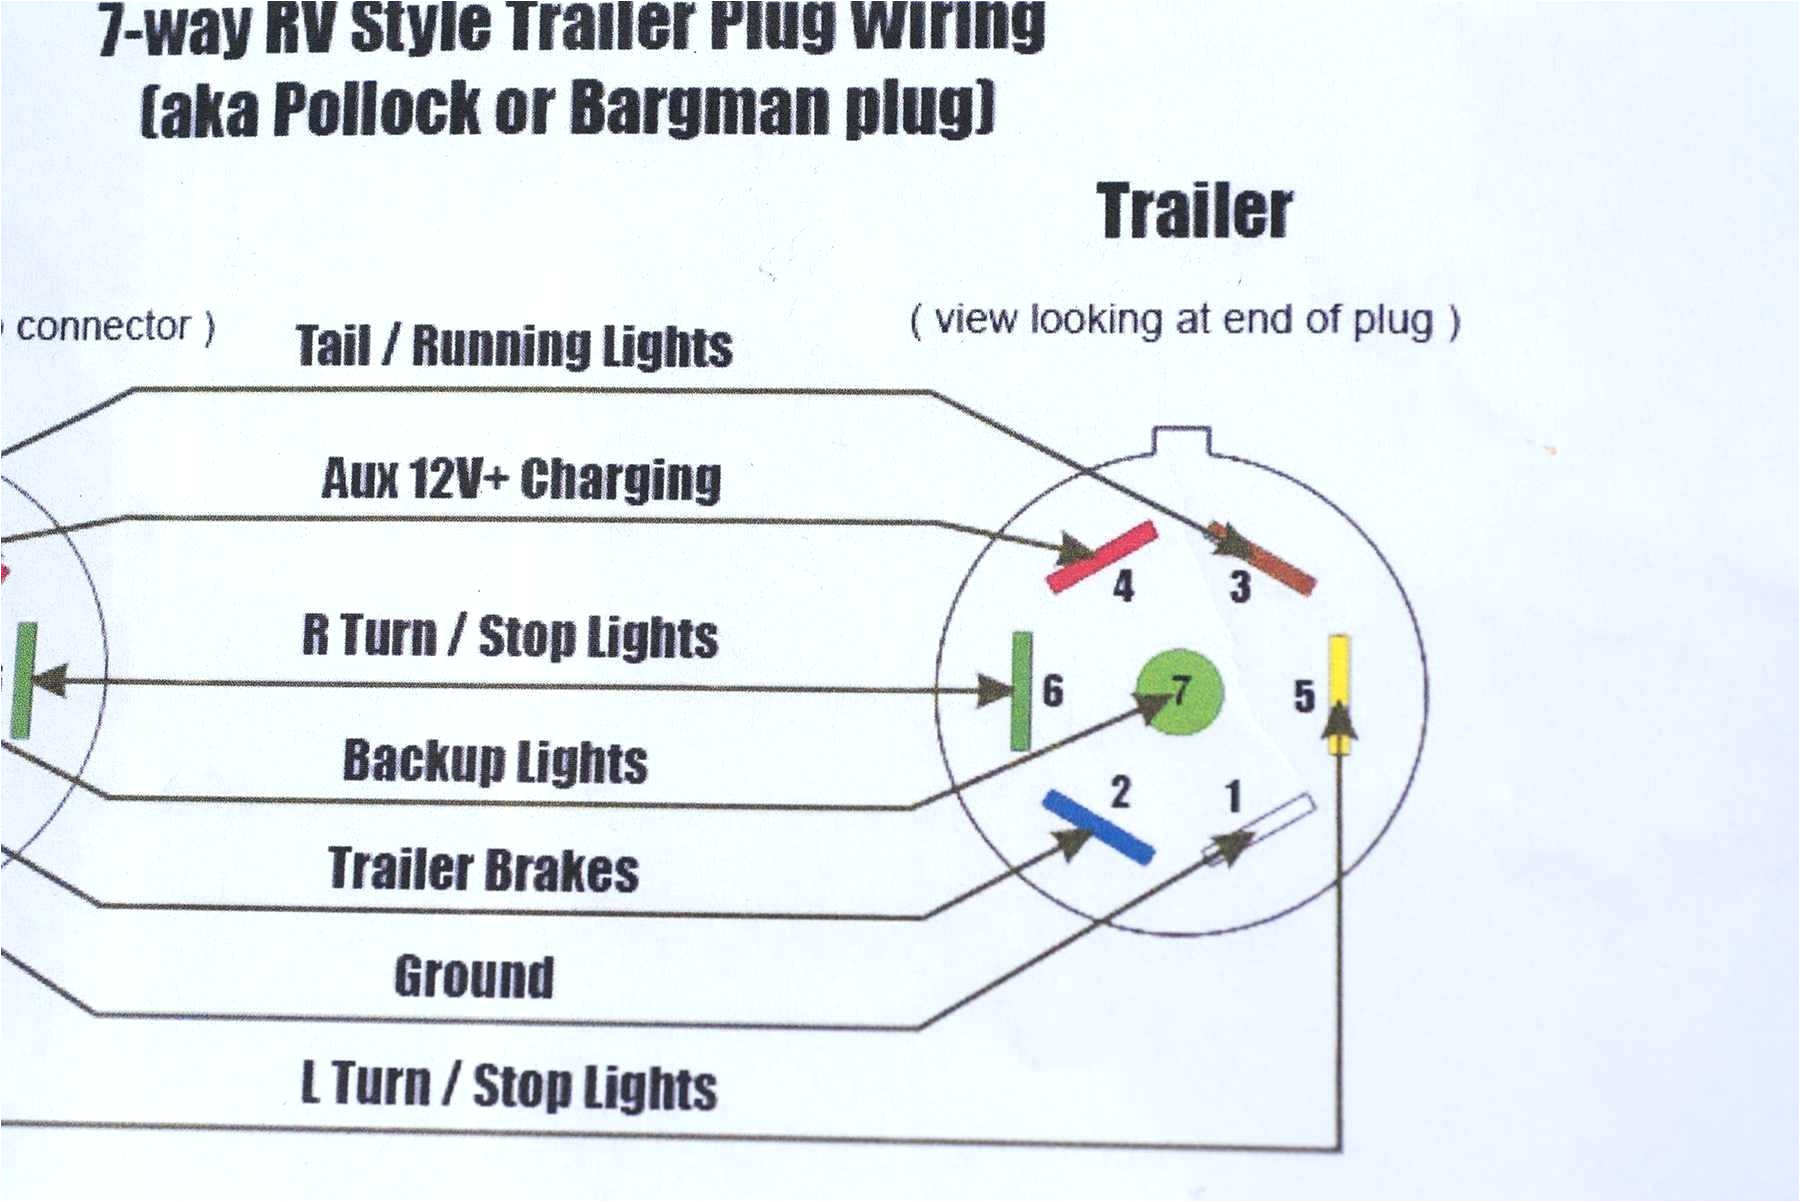 hopkins 7 way rv plug wiring diagram wiring diagram perfomance hopkins rv plug wiring diagram hopkins